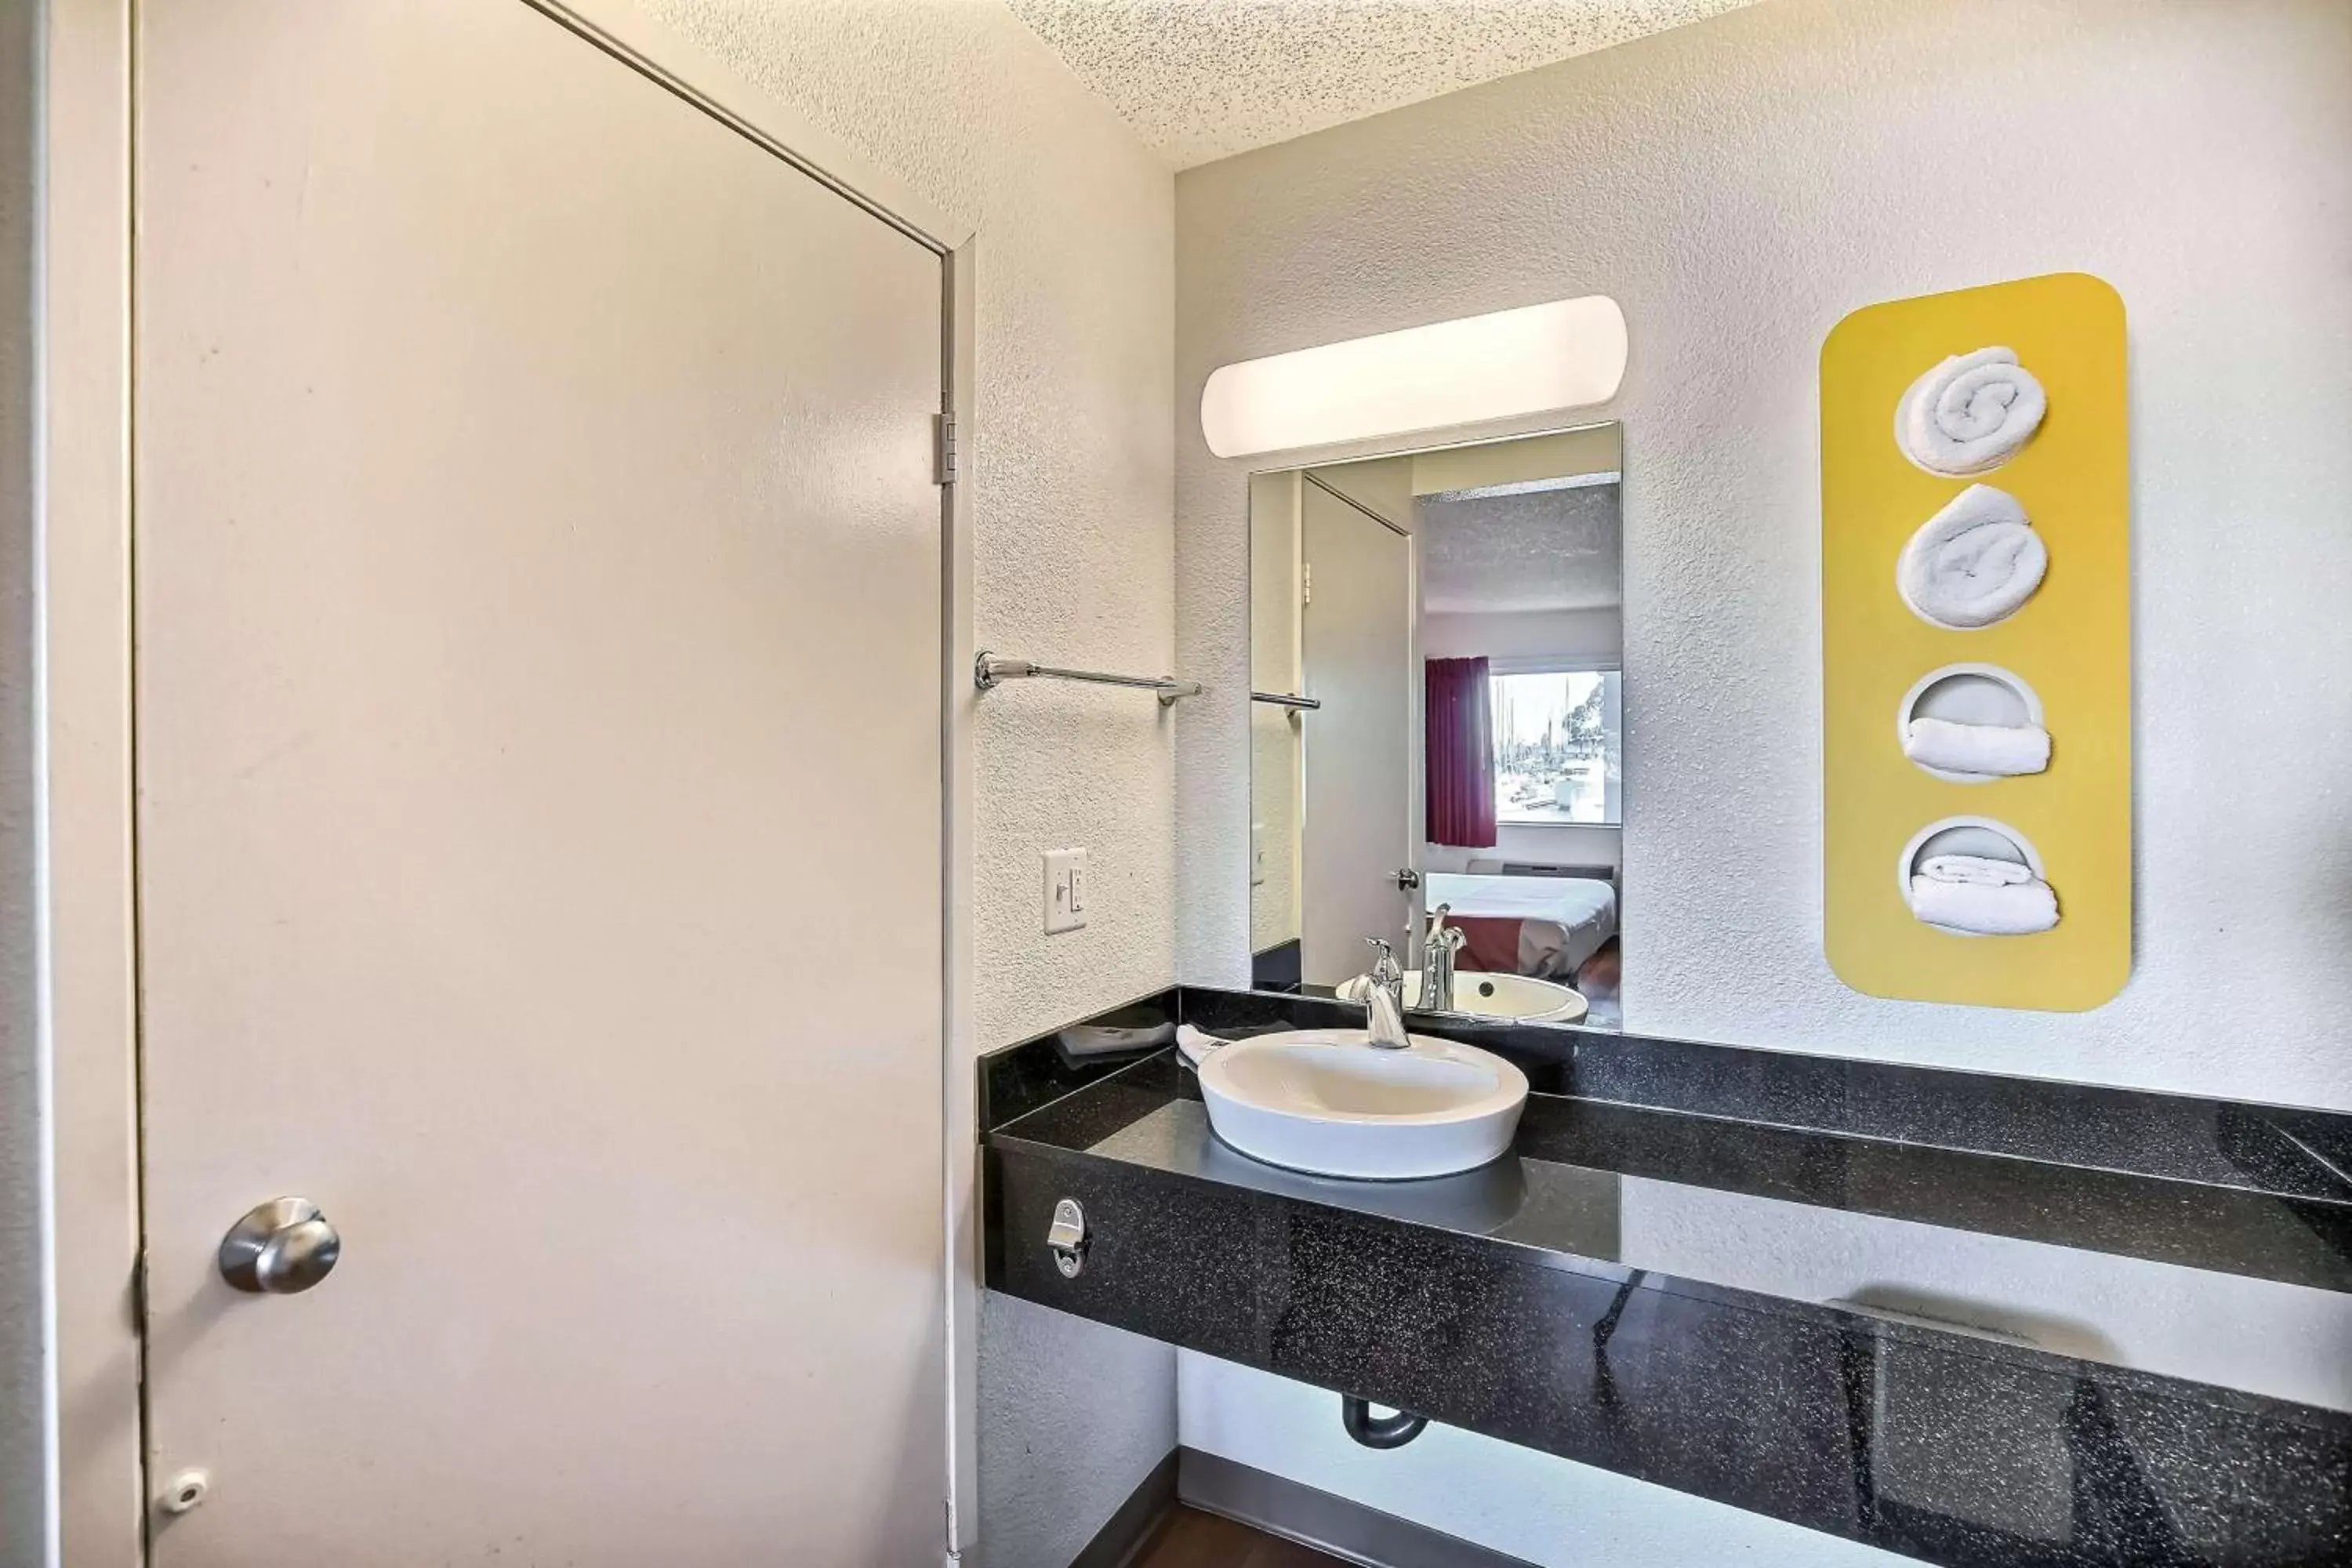 Executive Queen Room with Two Queen Beds in Motel 6-Oakland, CA - Embarcadero